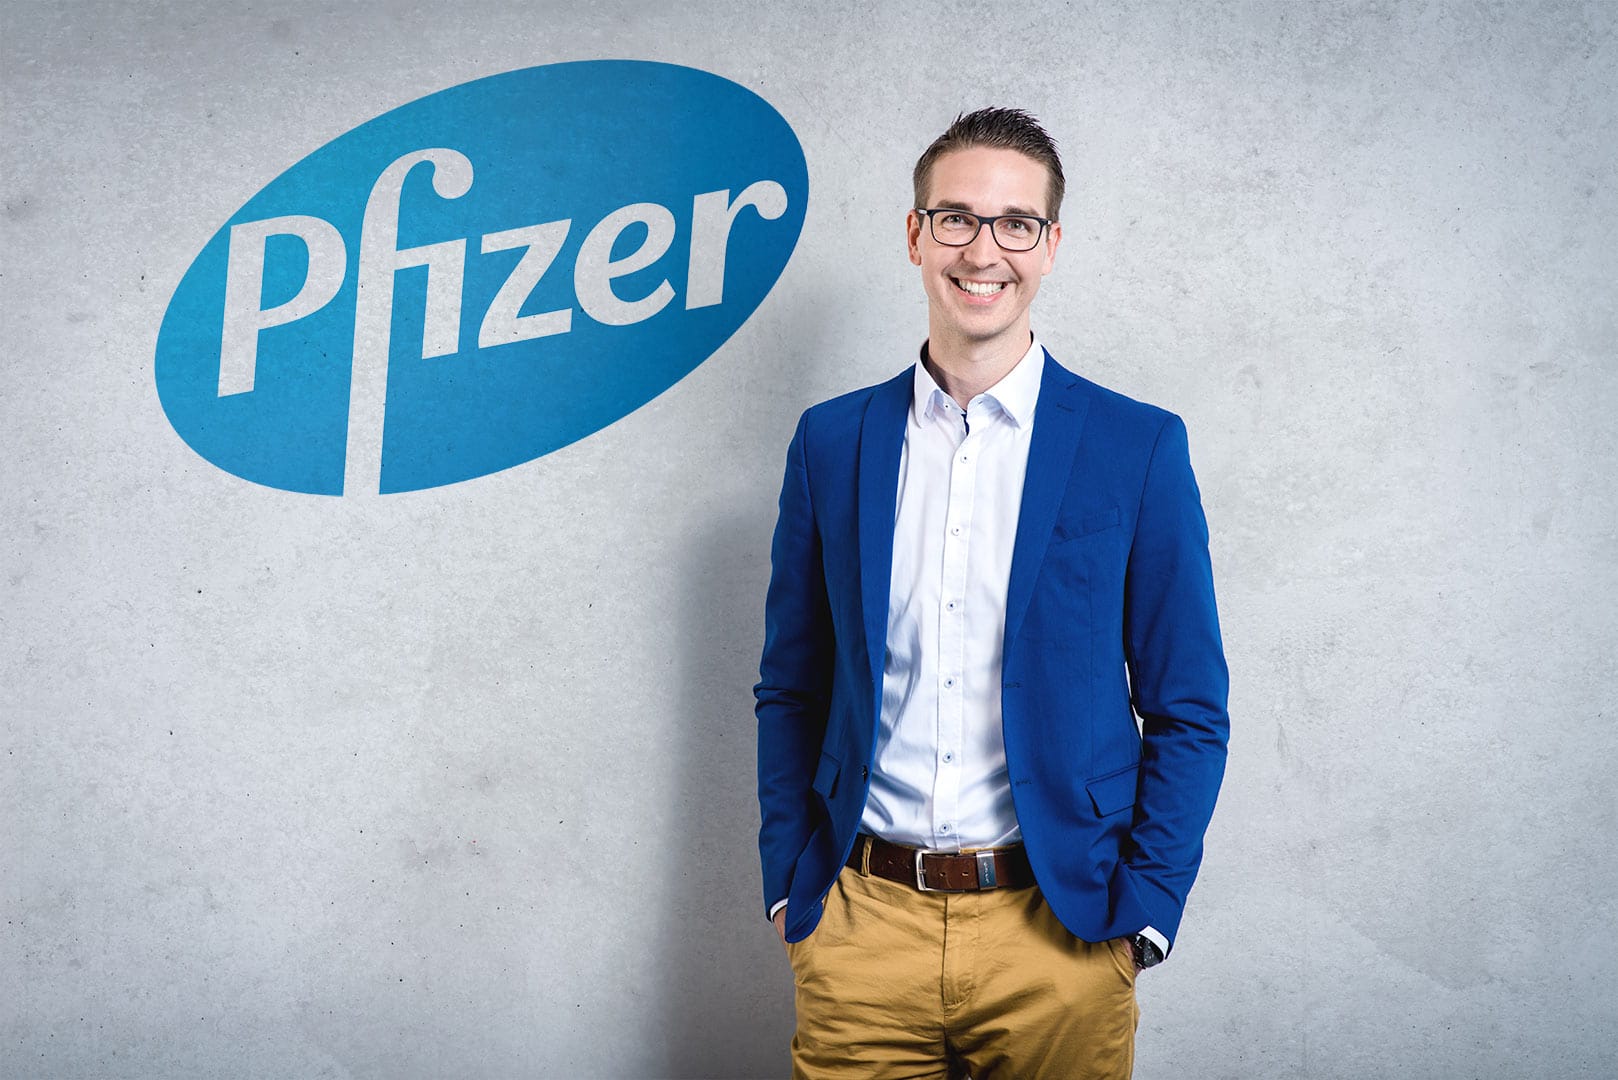 Pfizer-Germany-Employer-Branding-Human-Resources-Campaign-Portraits-04.jpg